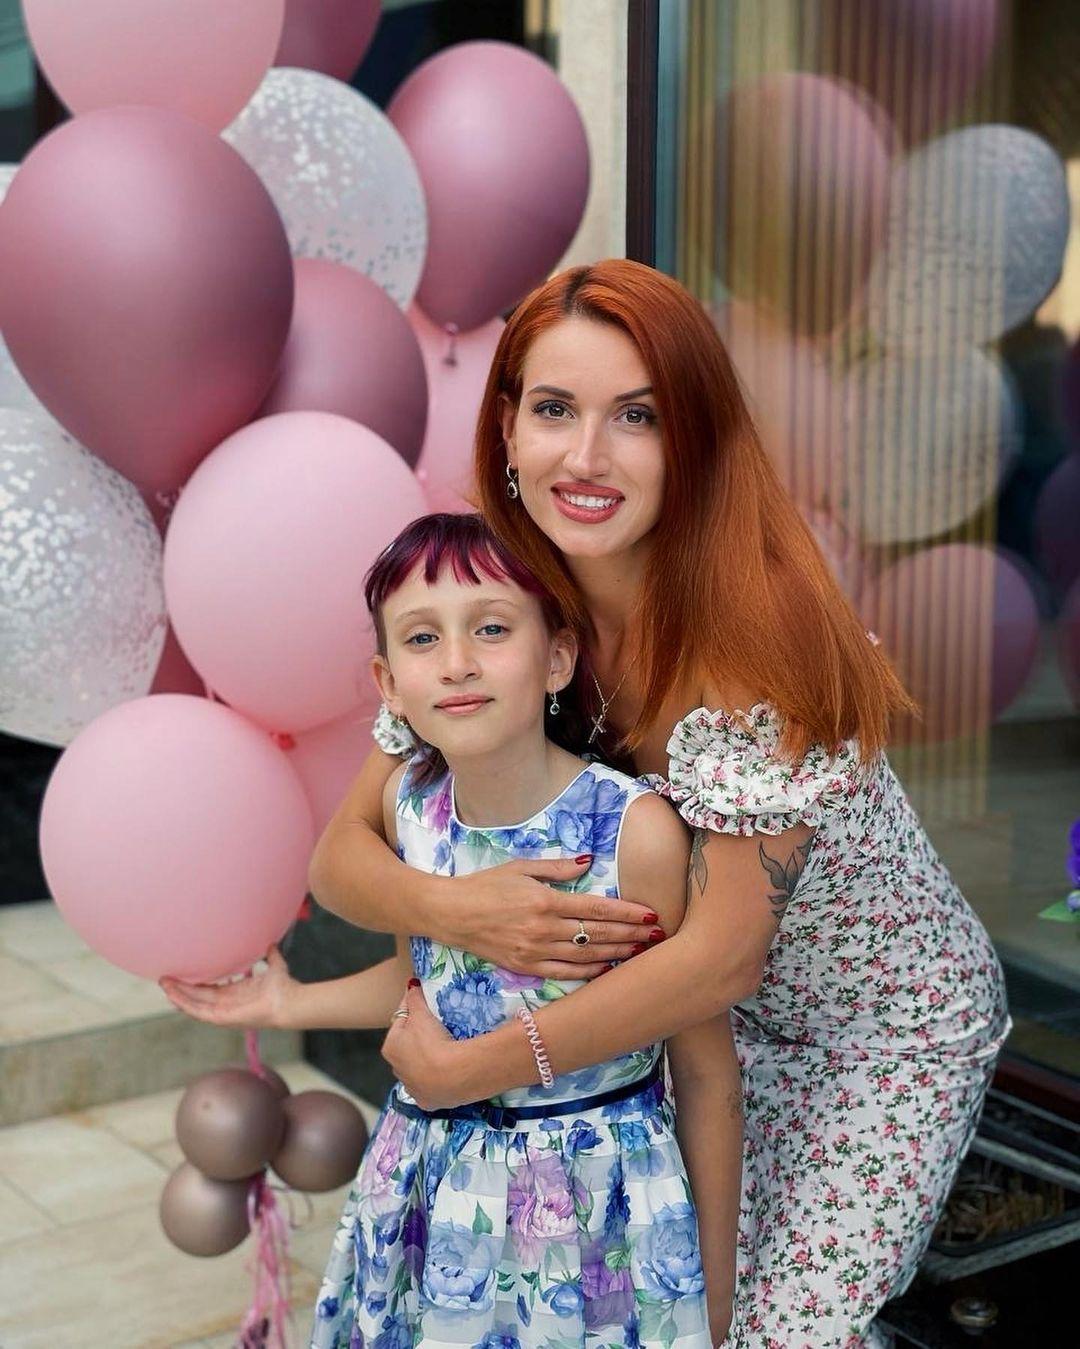 Evgenia Emerald con su hija / instagram.com/emerald.evgeniya